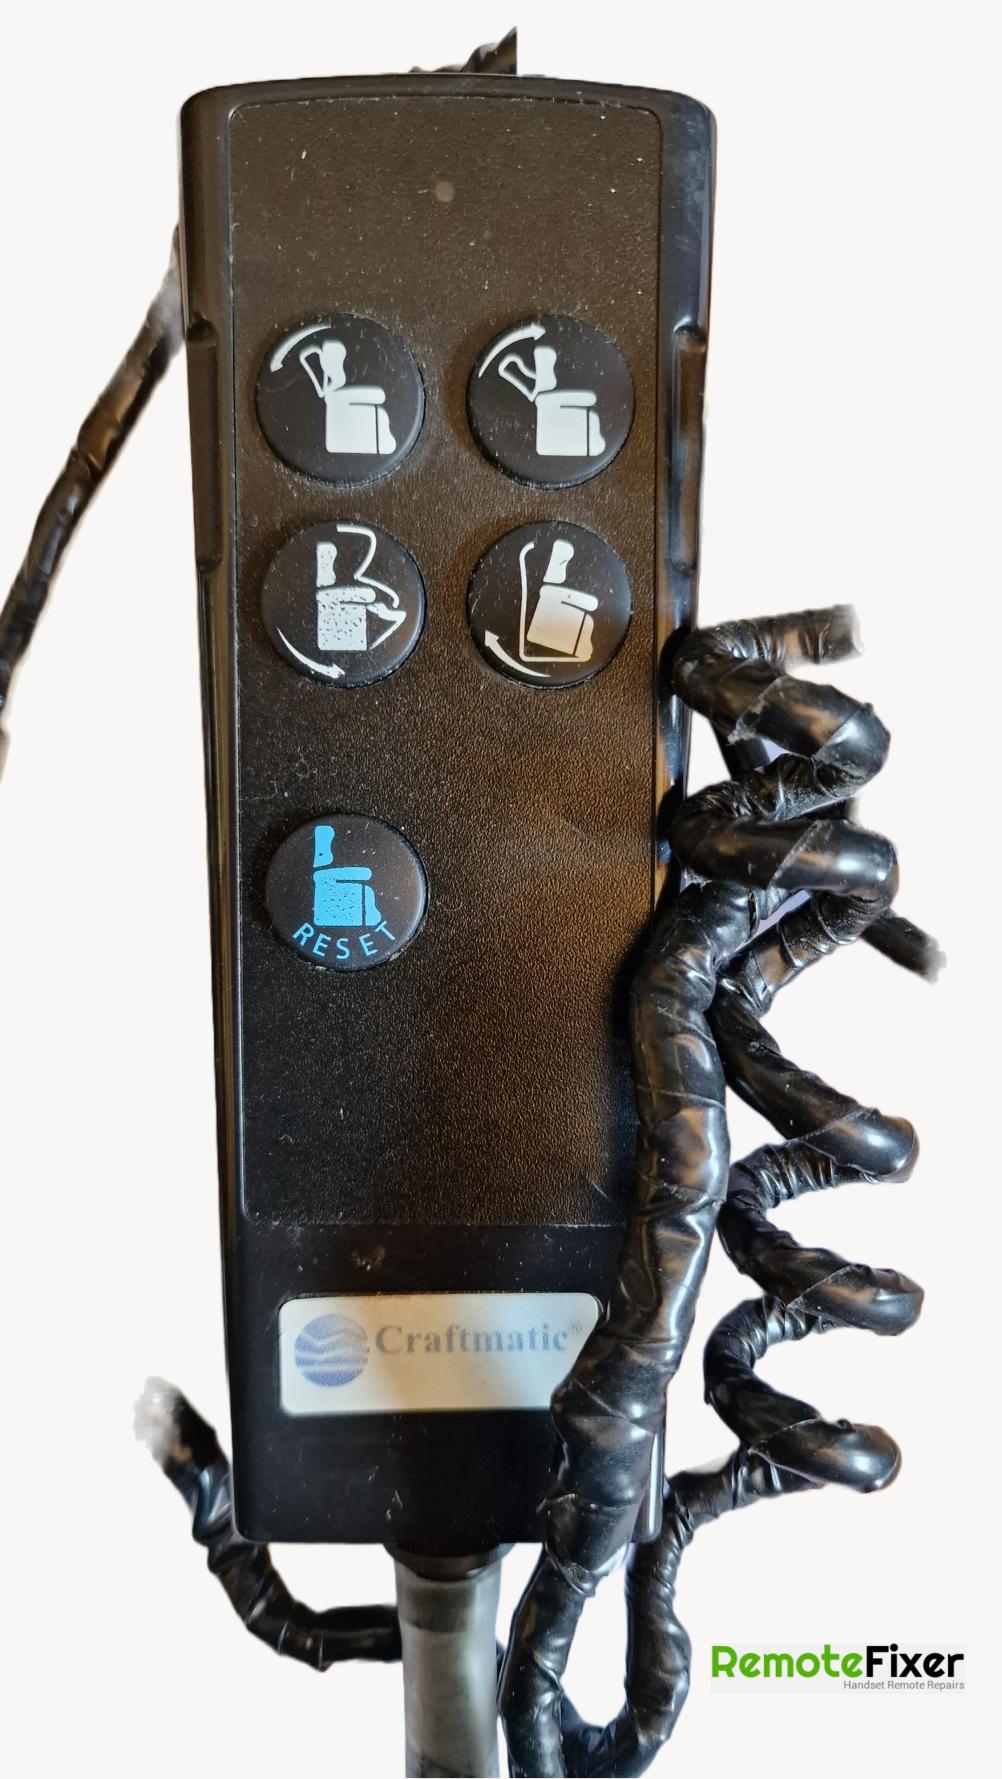 Craftmatic 5 Button Remote Control - Front Image